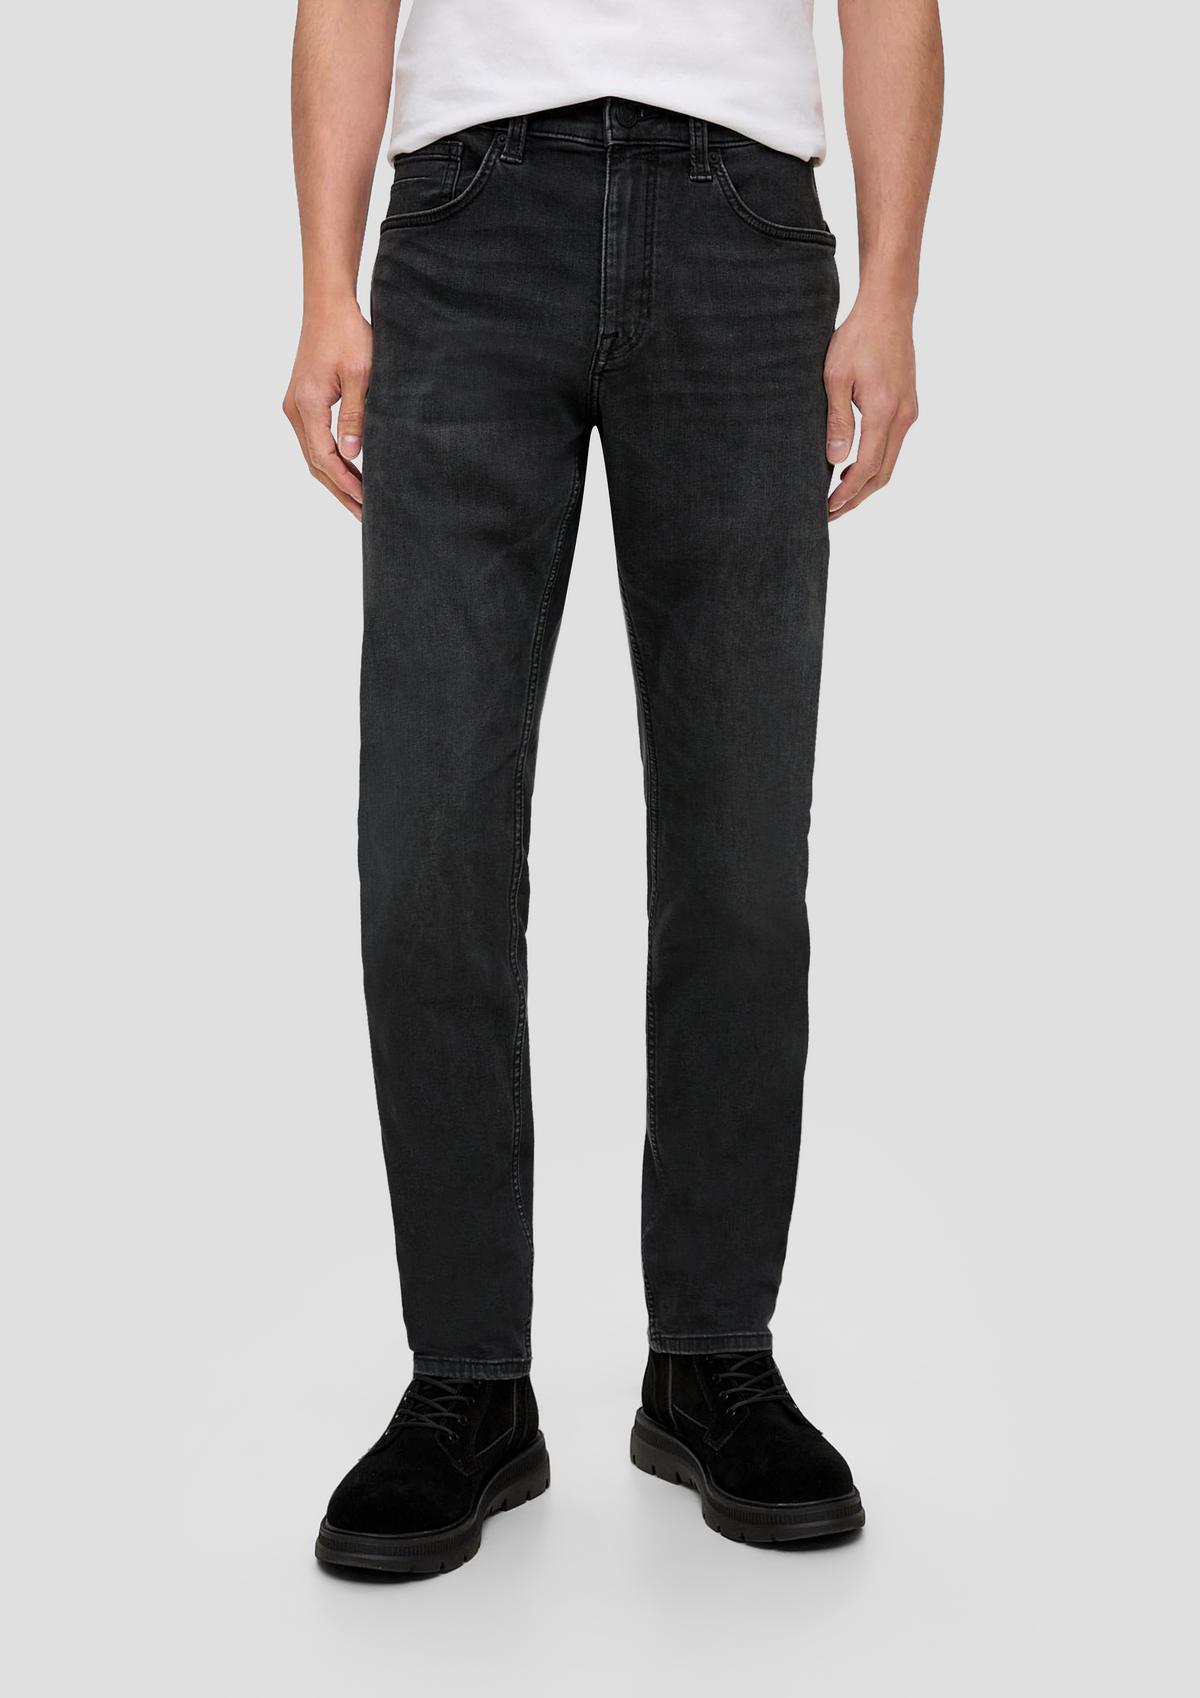 Jeans Mauro / regular fit / high rise / tapered leg / garment wash